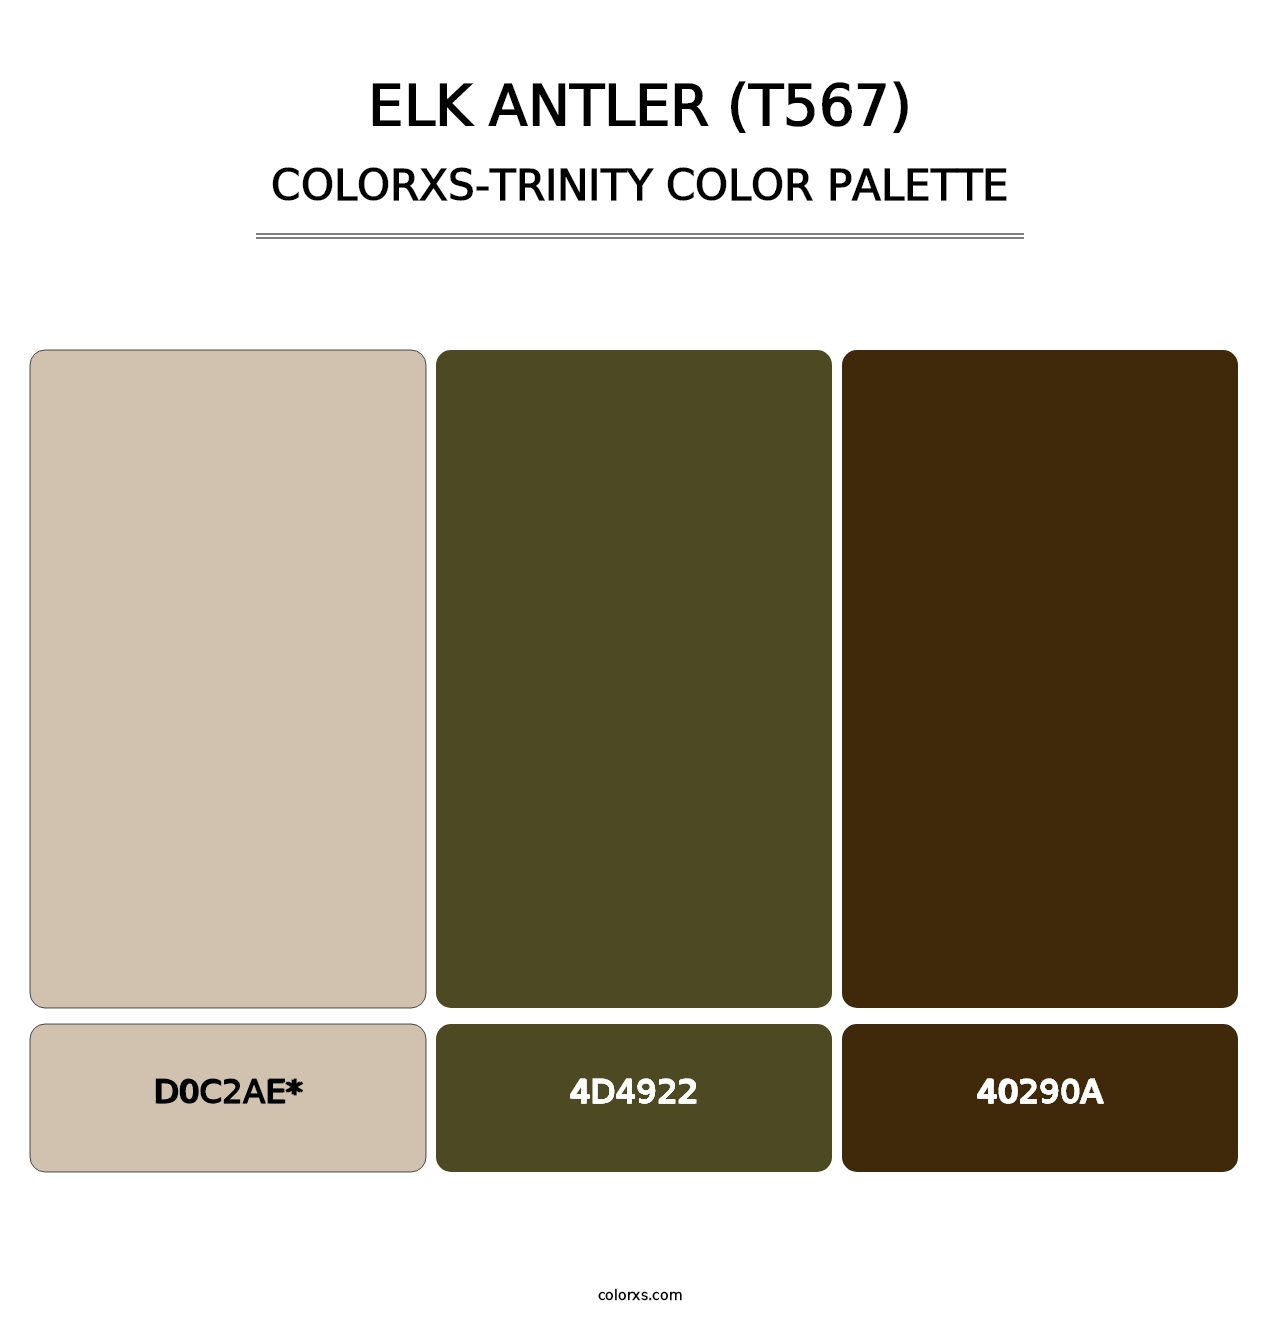 Elk Antler (T567) - Colorxs Trinity Palette